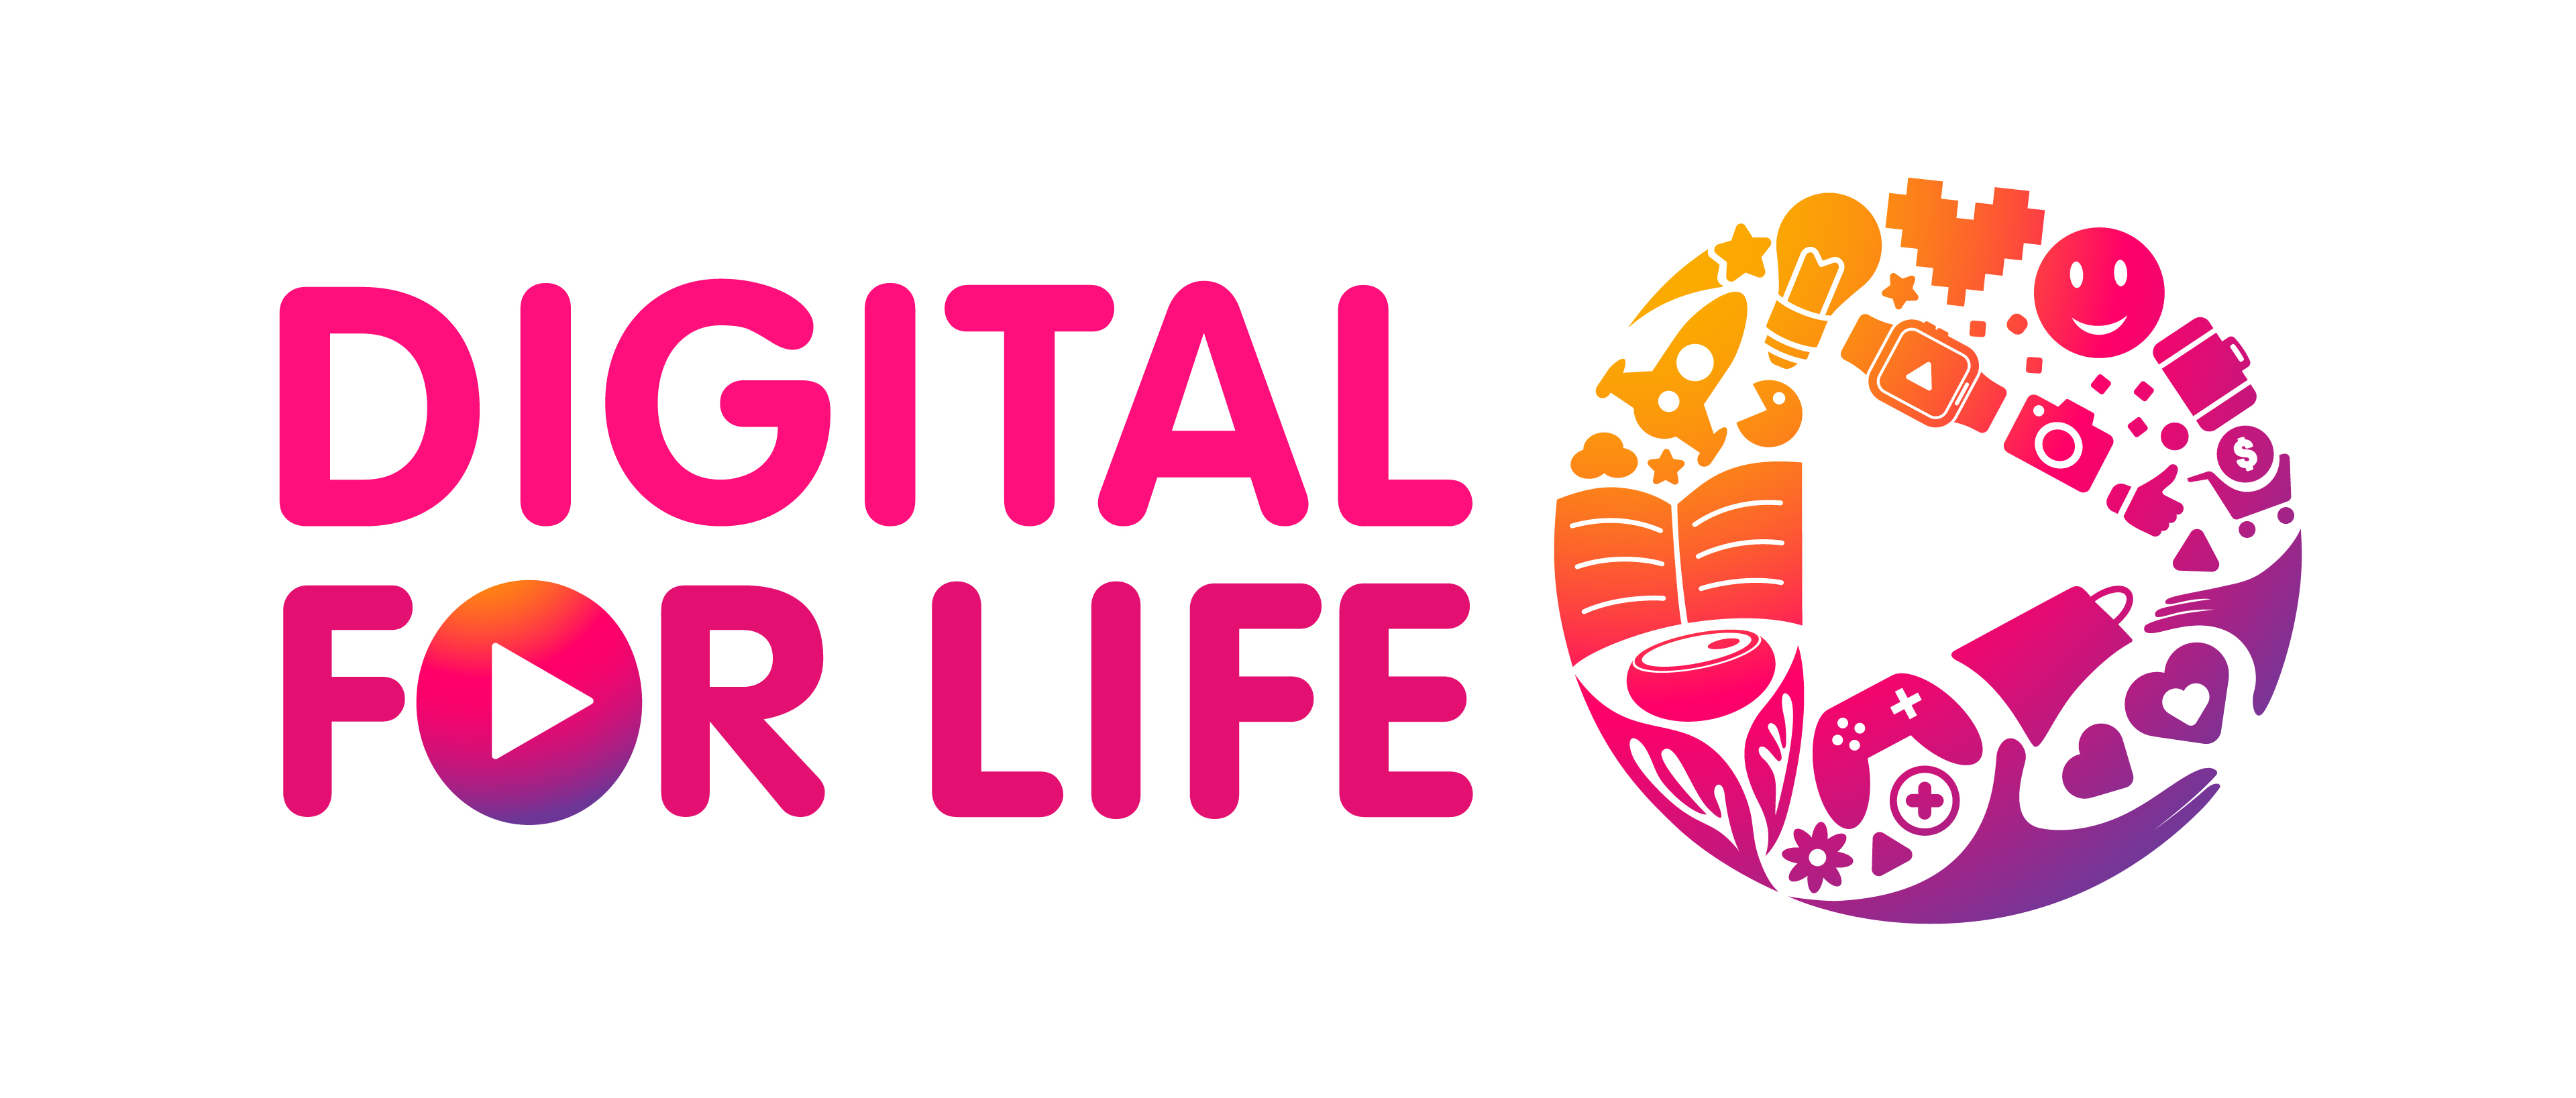 The Digital for Life logo